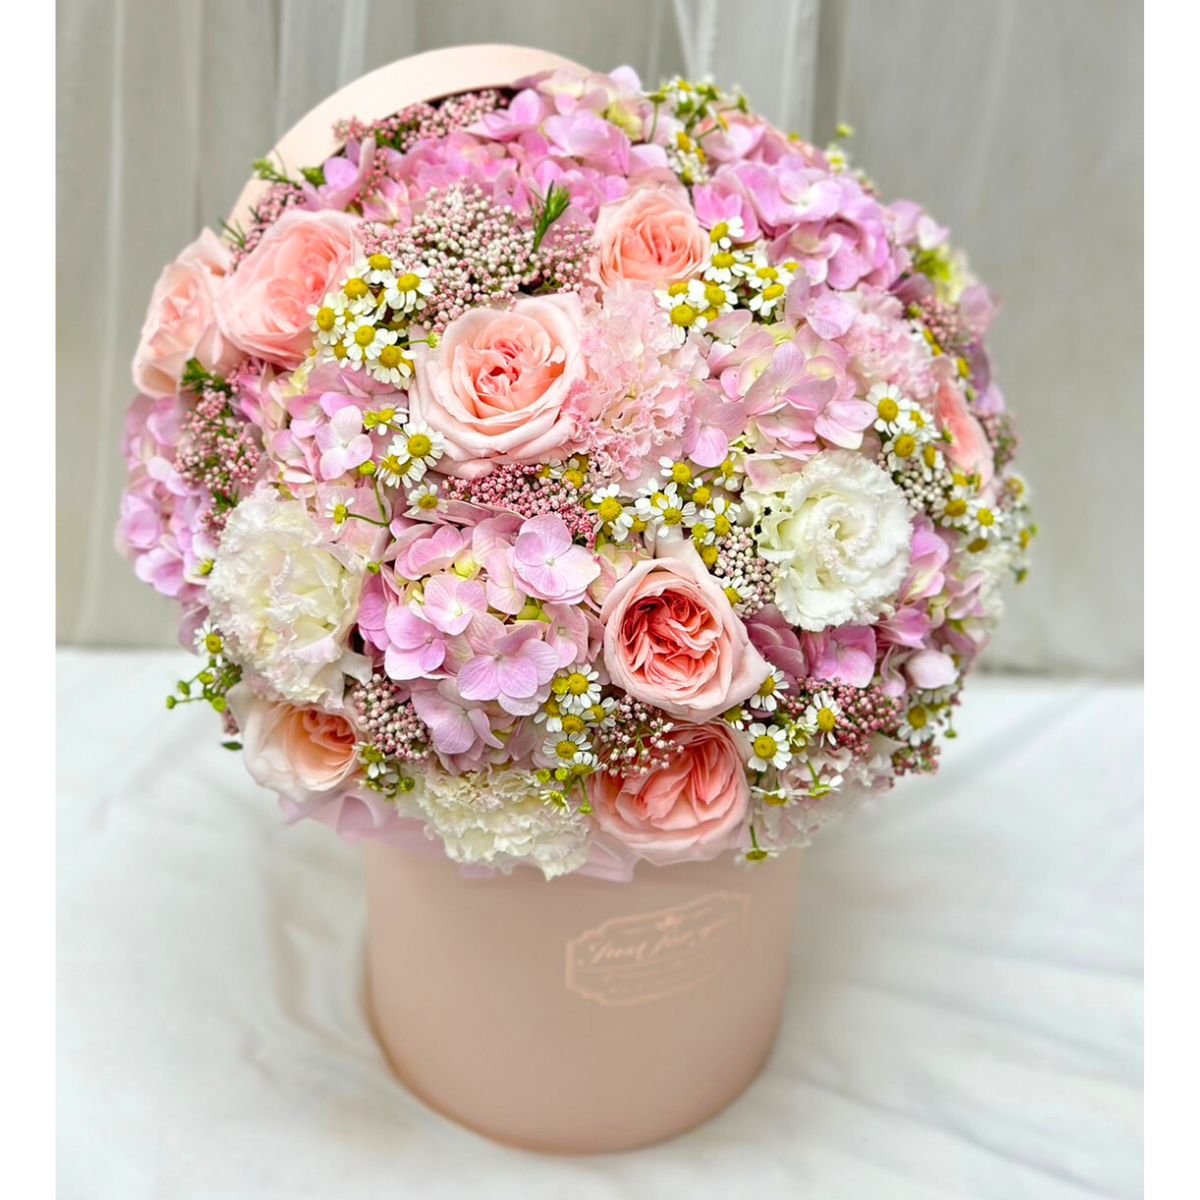 'I Love You' Flower Box